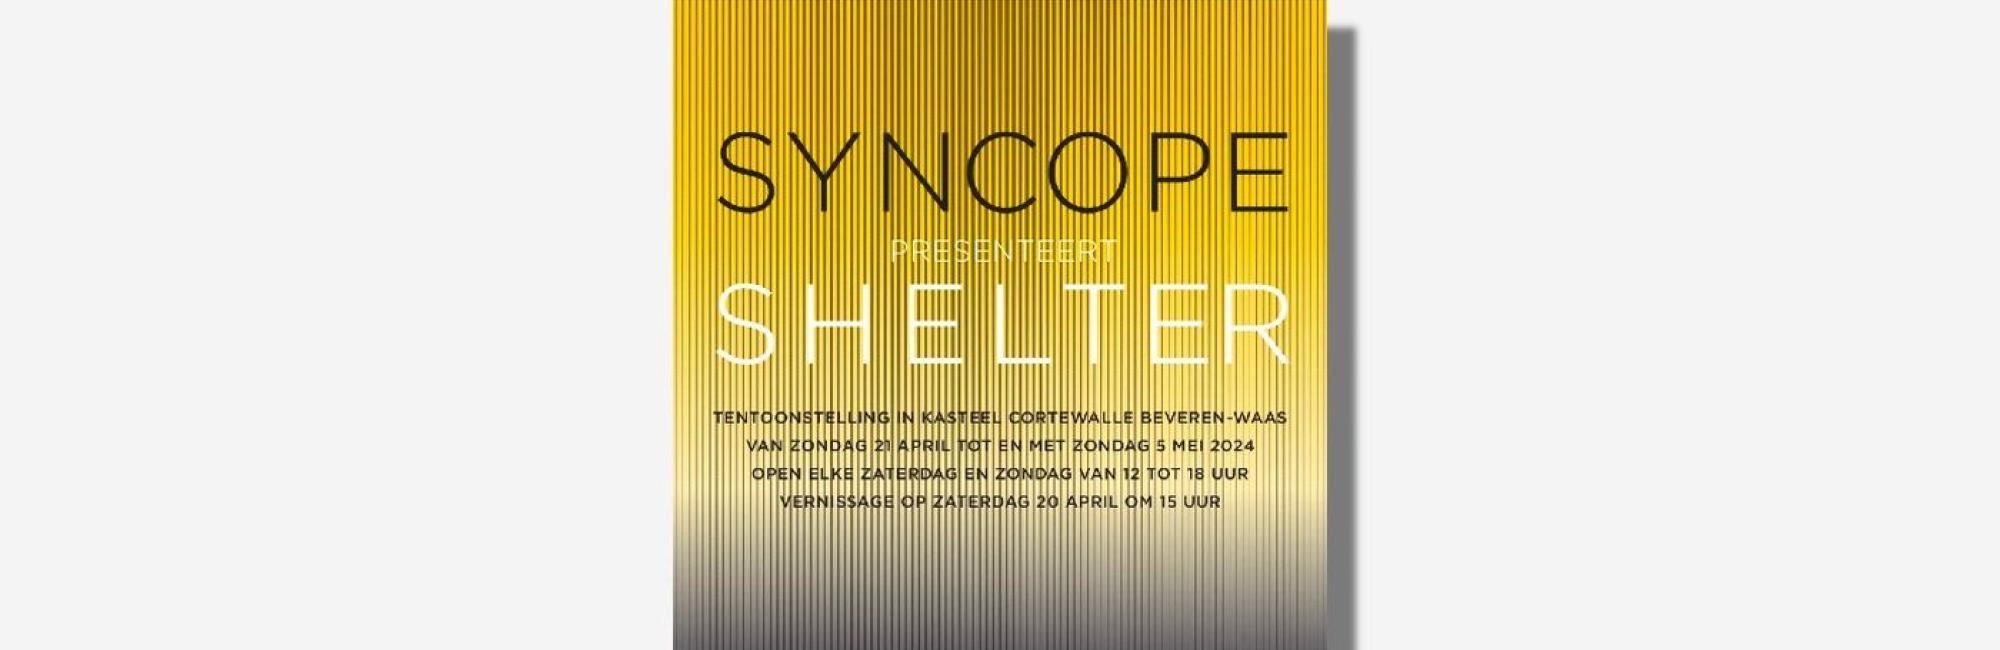 Affiche Syncope presenteert Shelter